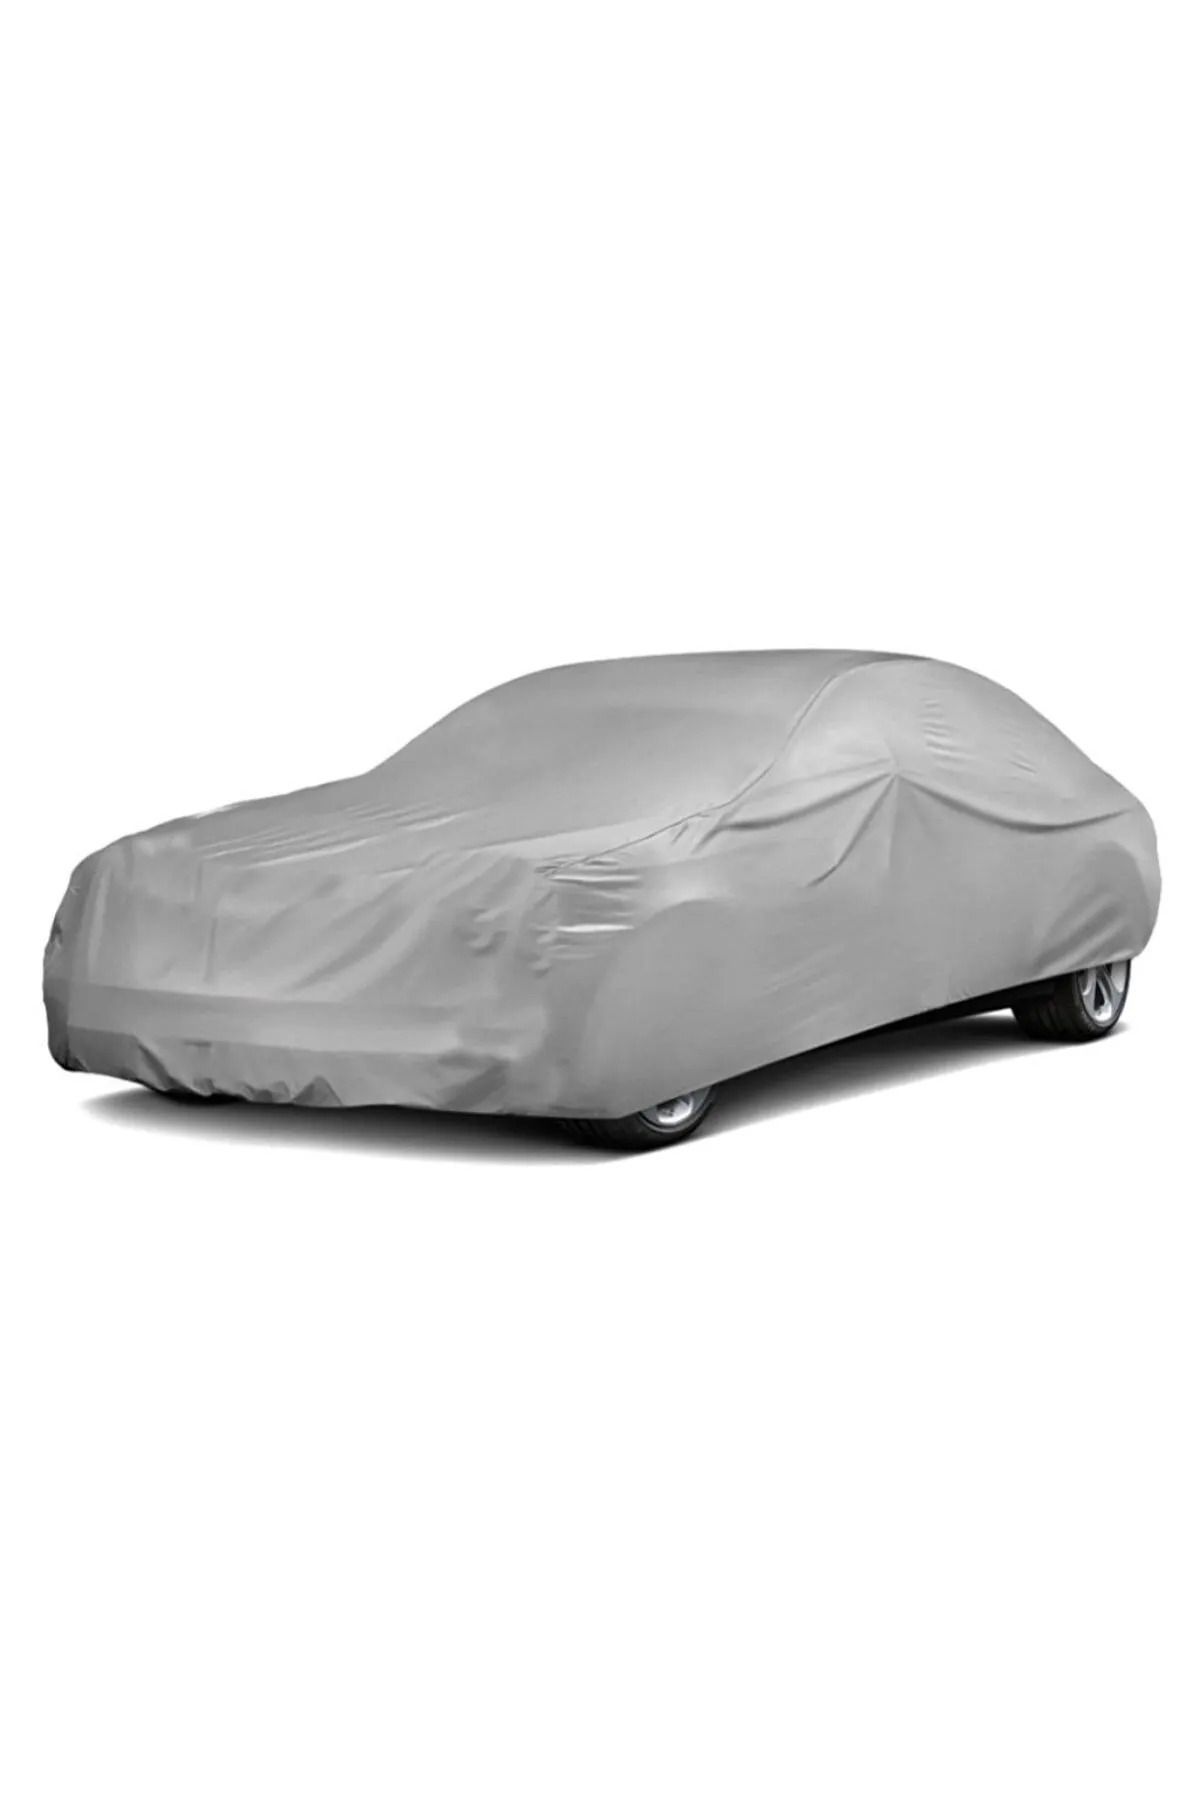 PlusOto Audi Rs3 Compatible Car Tarpaulin, Vehicle Cover, Tent - Trendyol